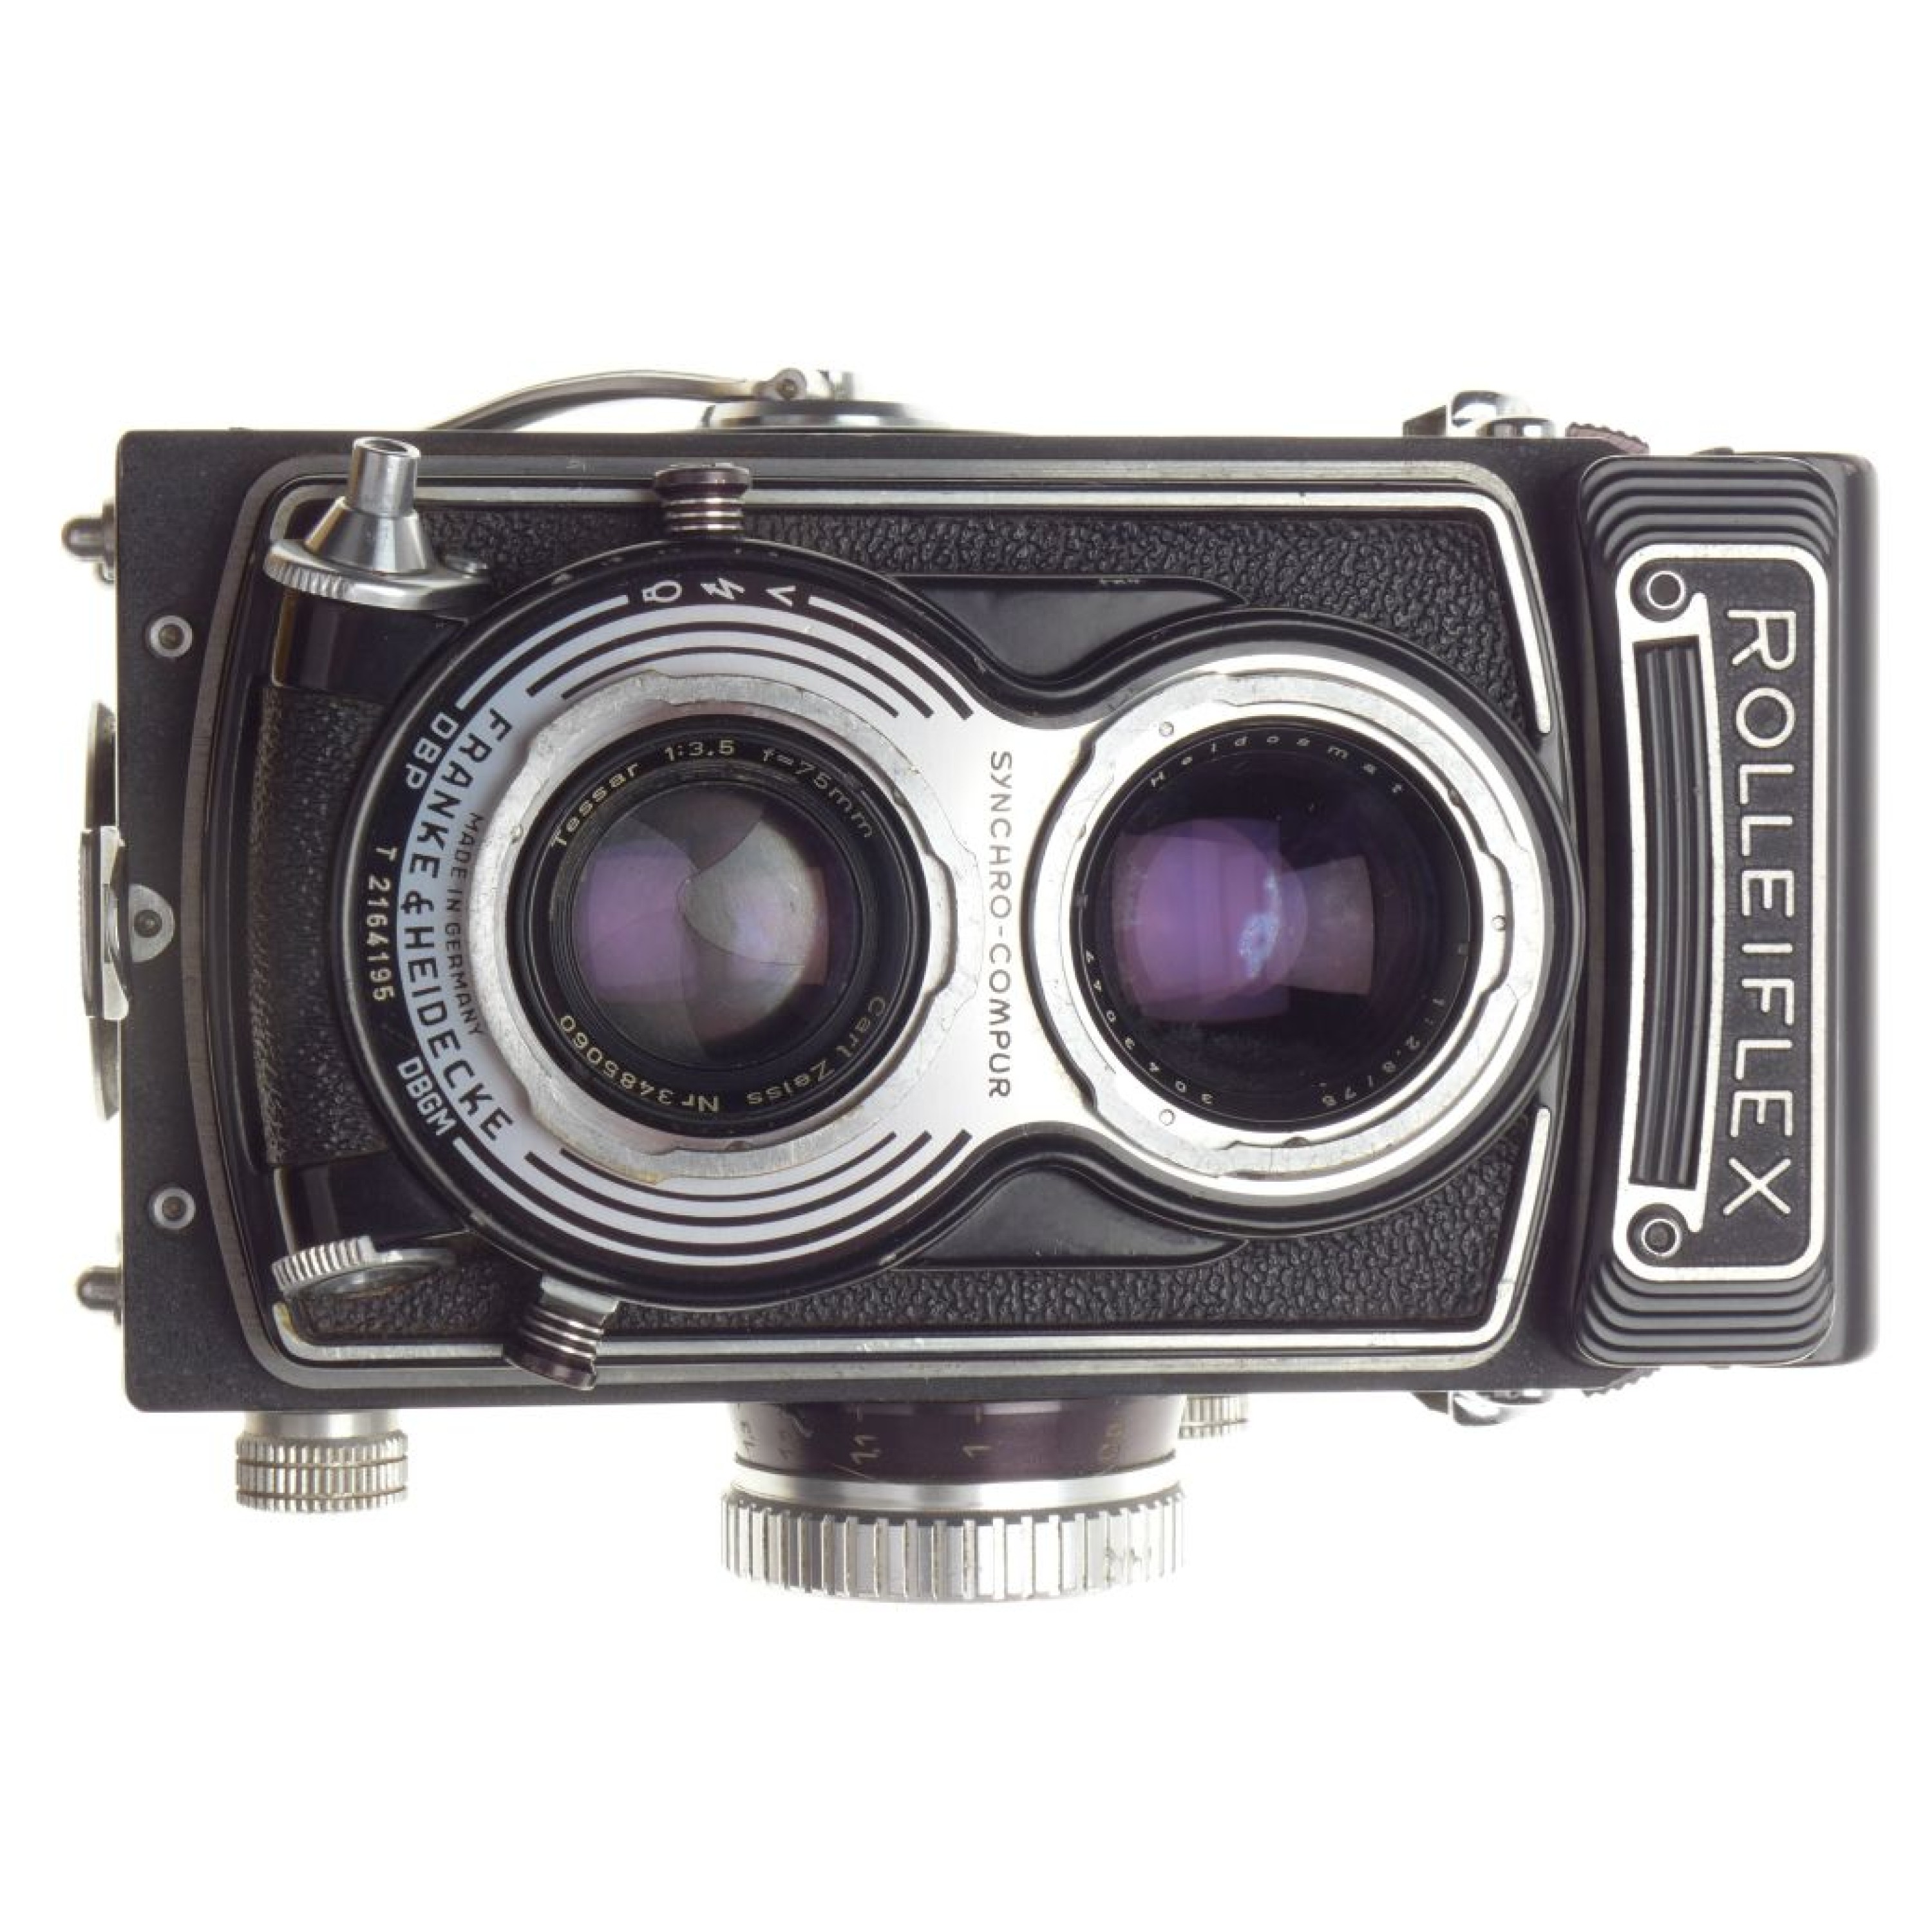 Rolleiflex Model T medium format TLR camera with Zeiss Tessar 1:3.5 fu003d75mm  lens